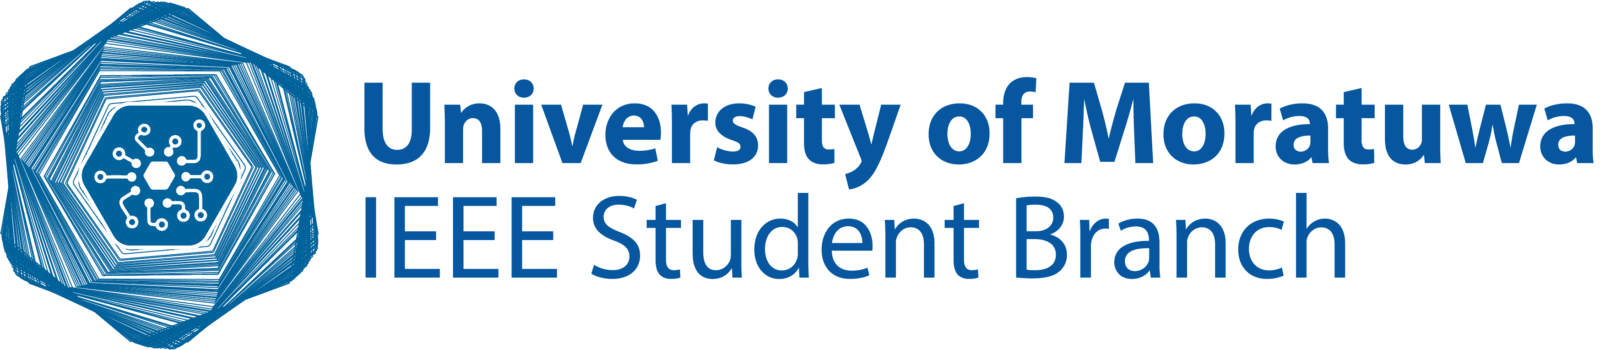 IEEE Student Branch University of Moratuwa